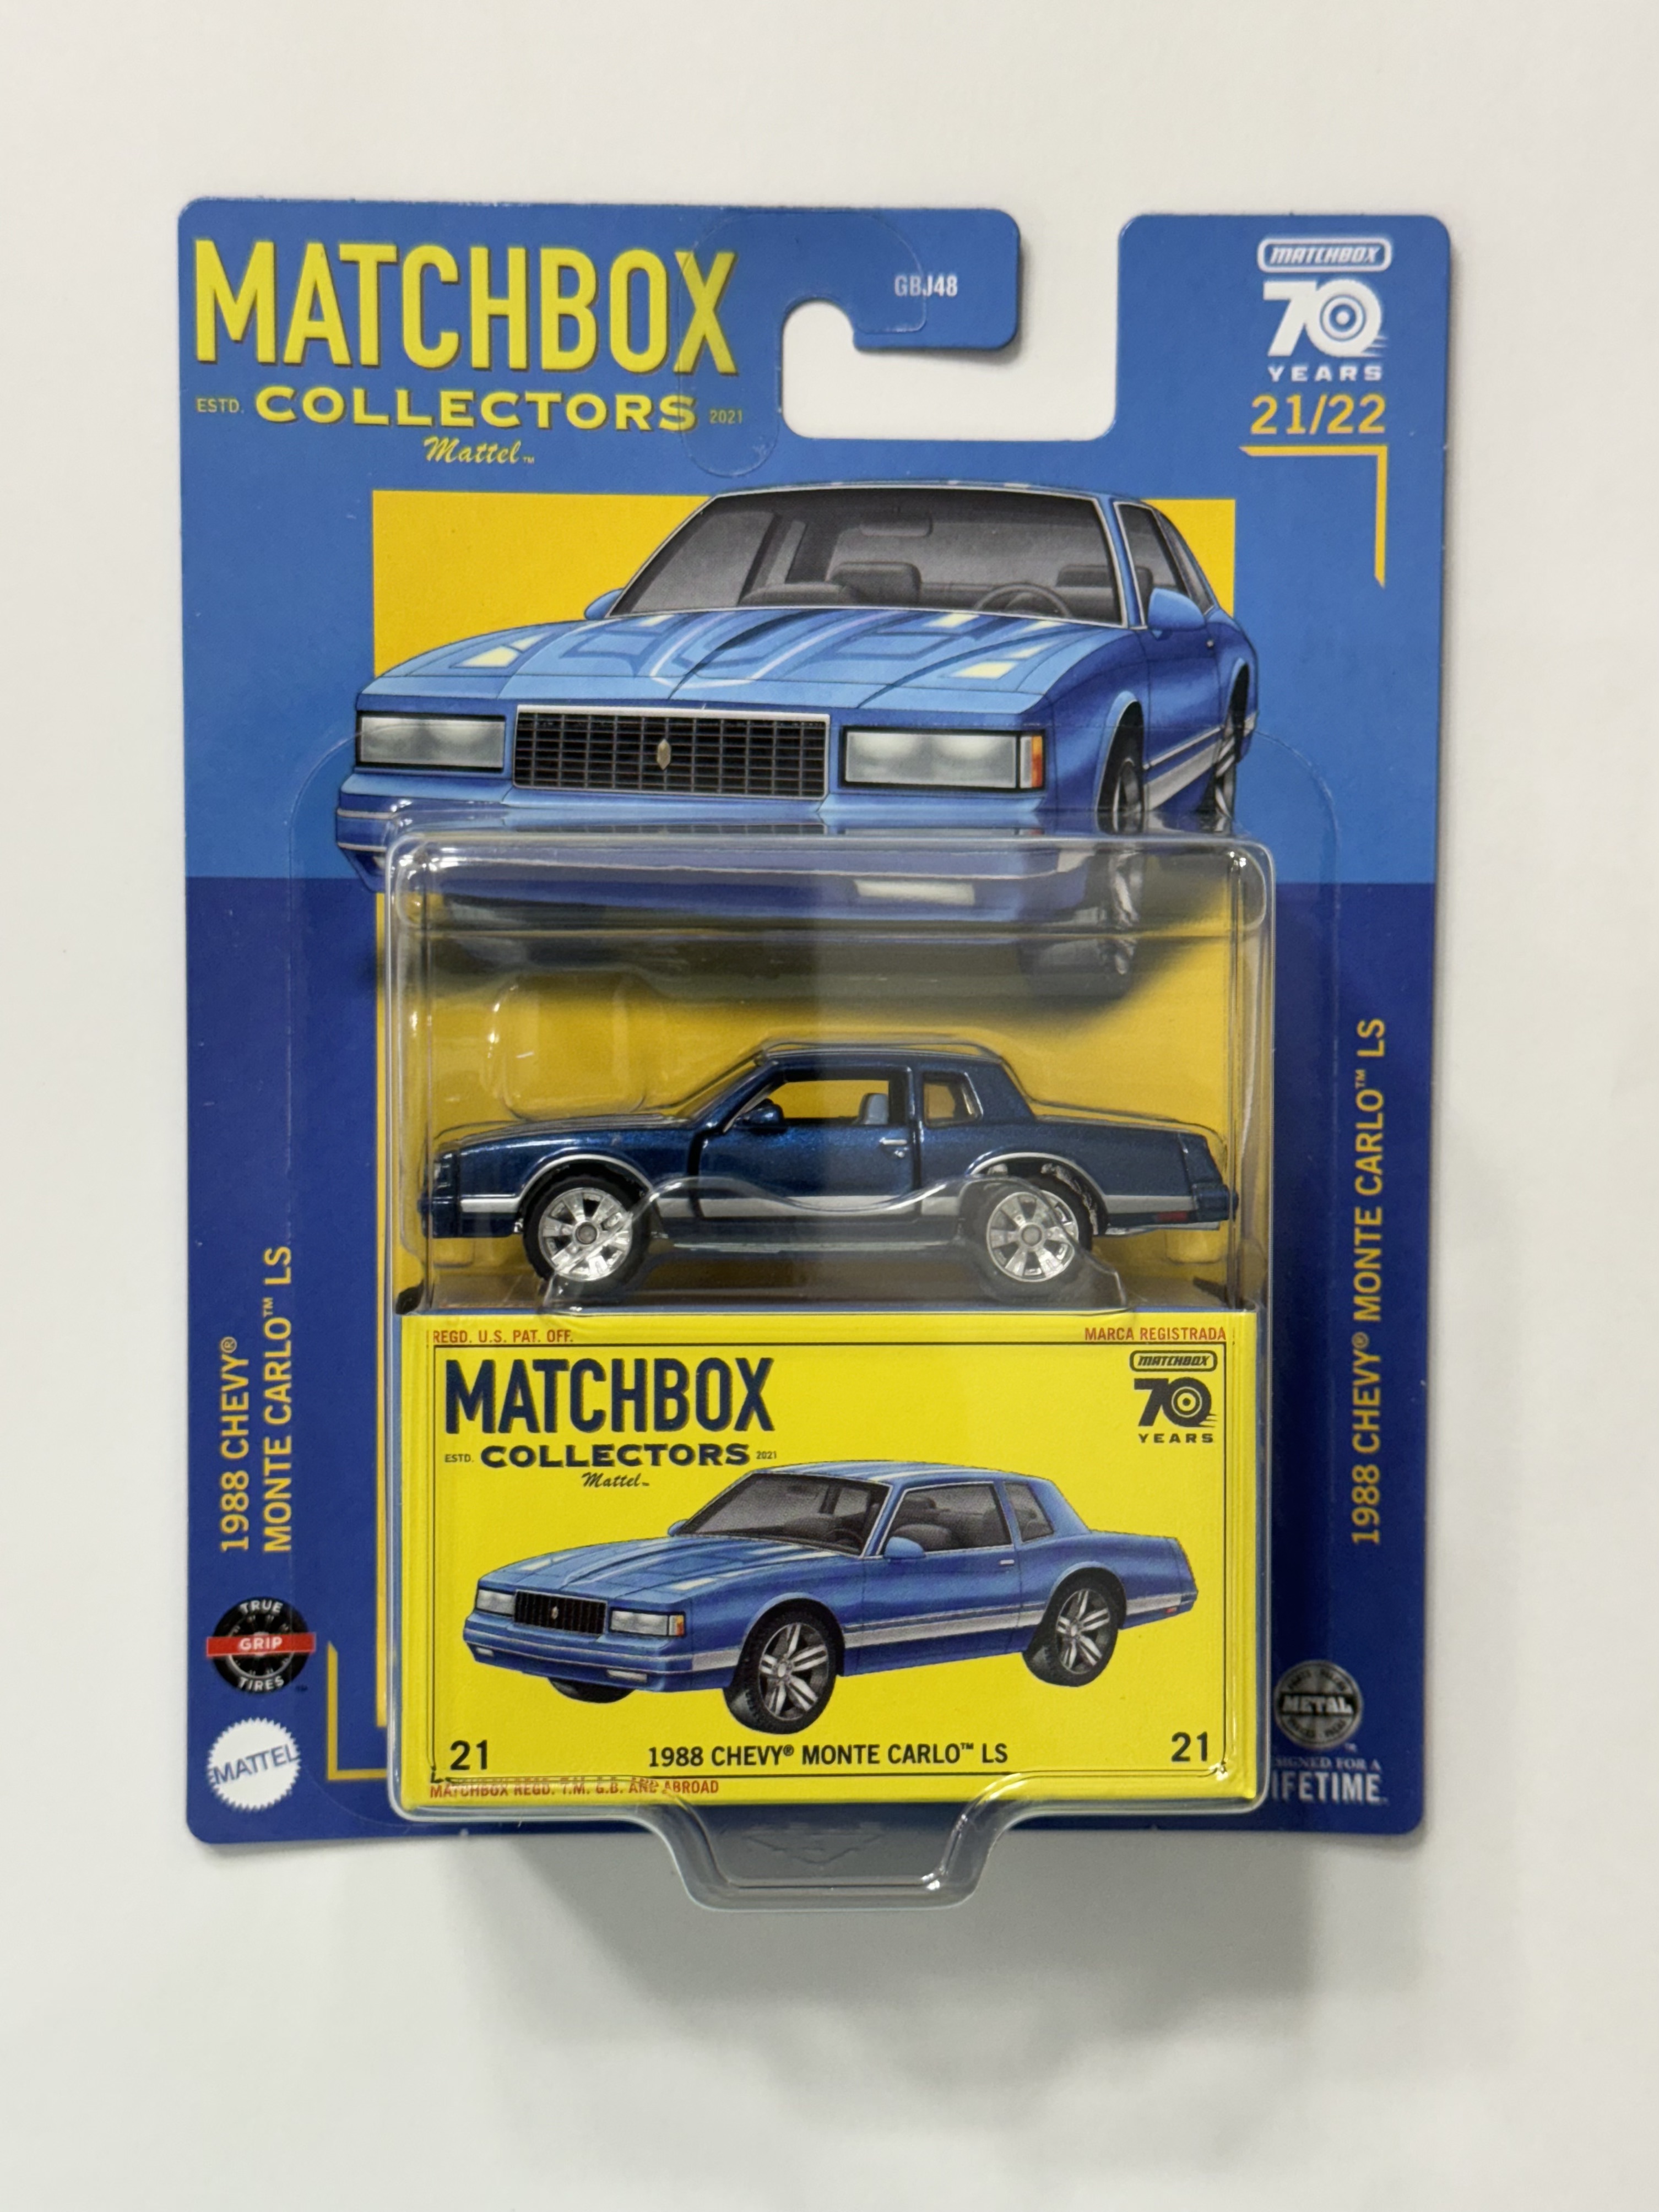 Matchbox Collectors #21 1988 Chevy Monte Carlo LS